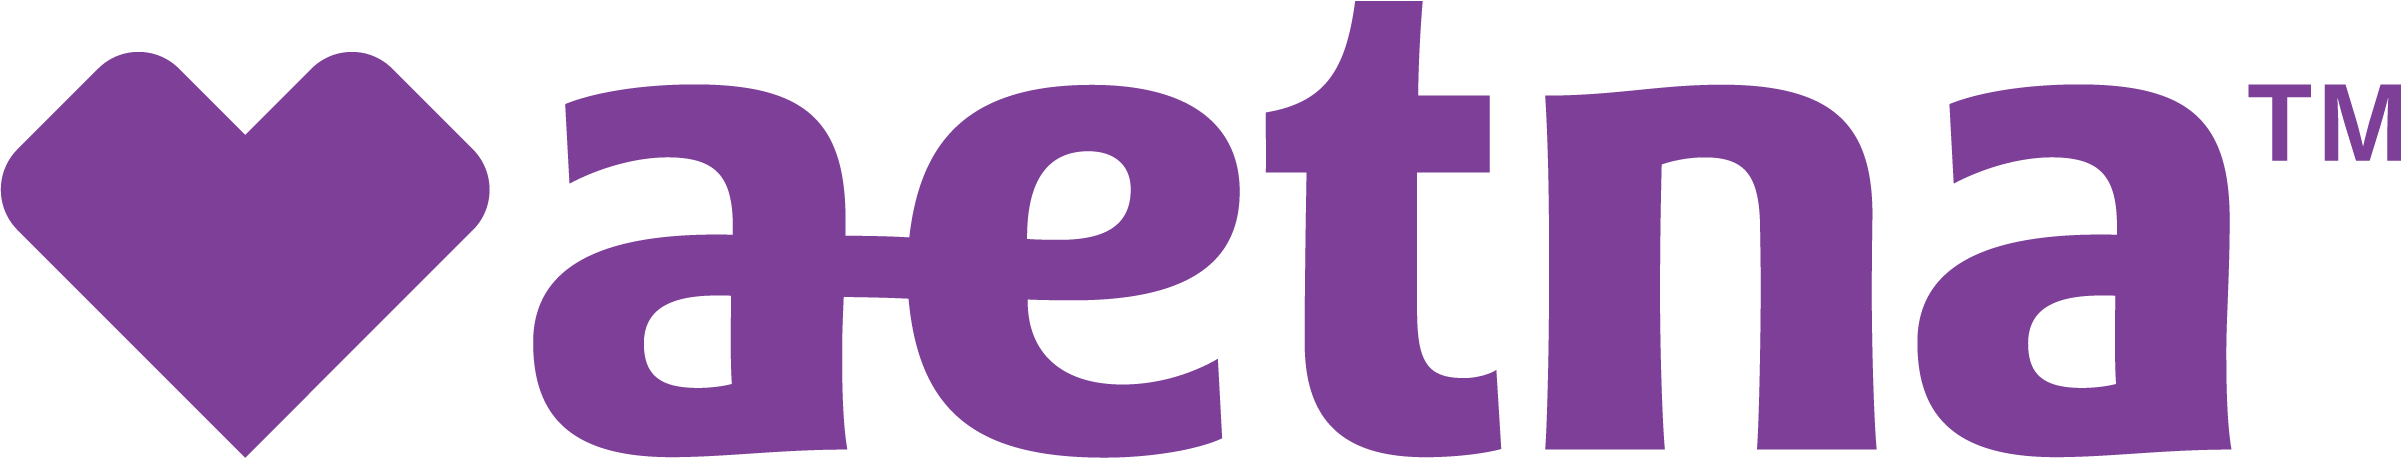 1_Heart_Aetna_logo_sm_rgb_violet